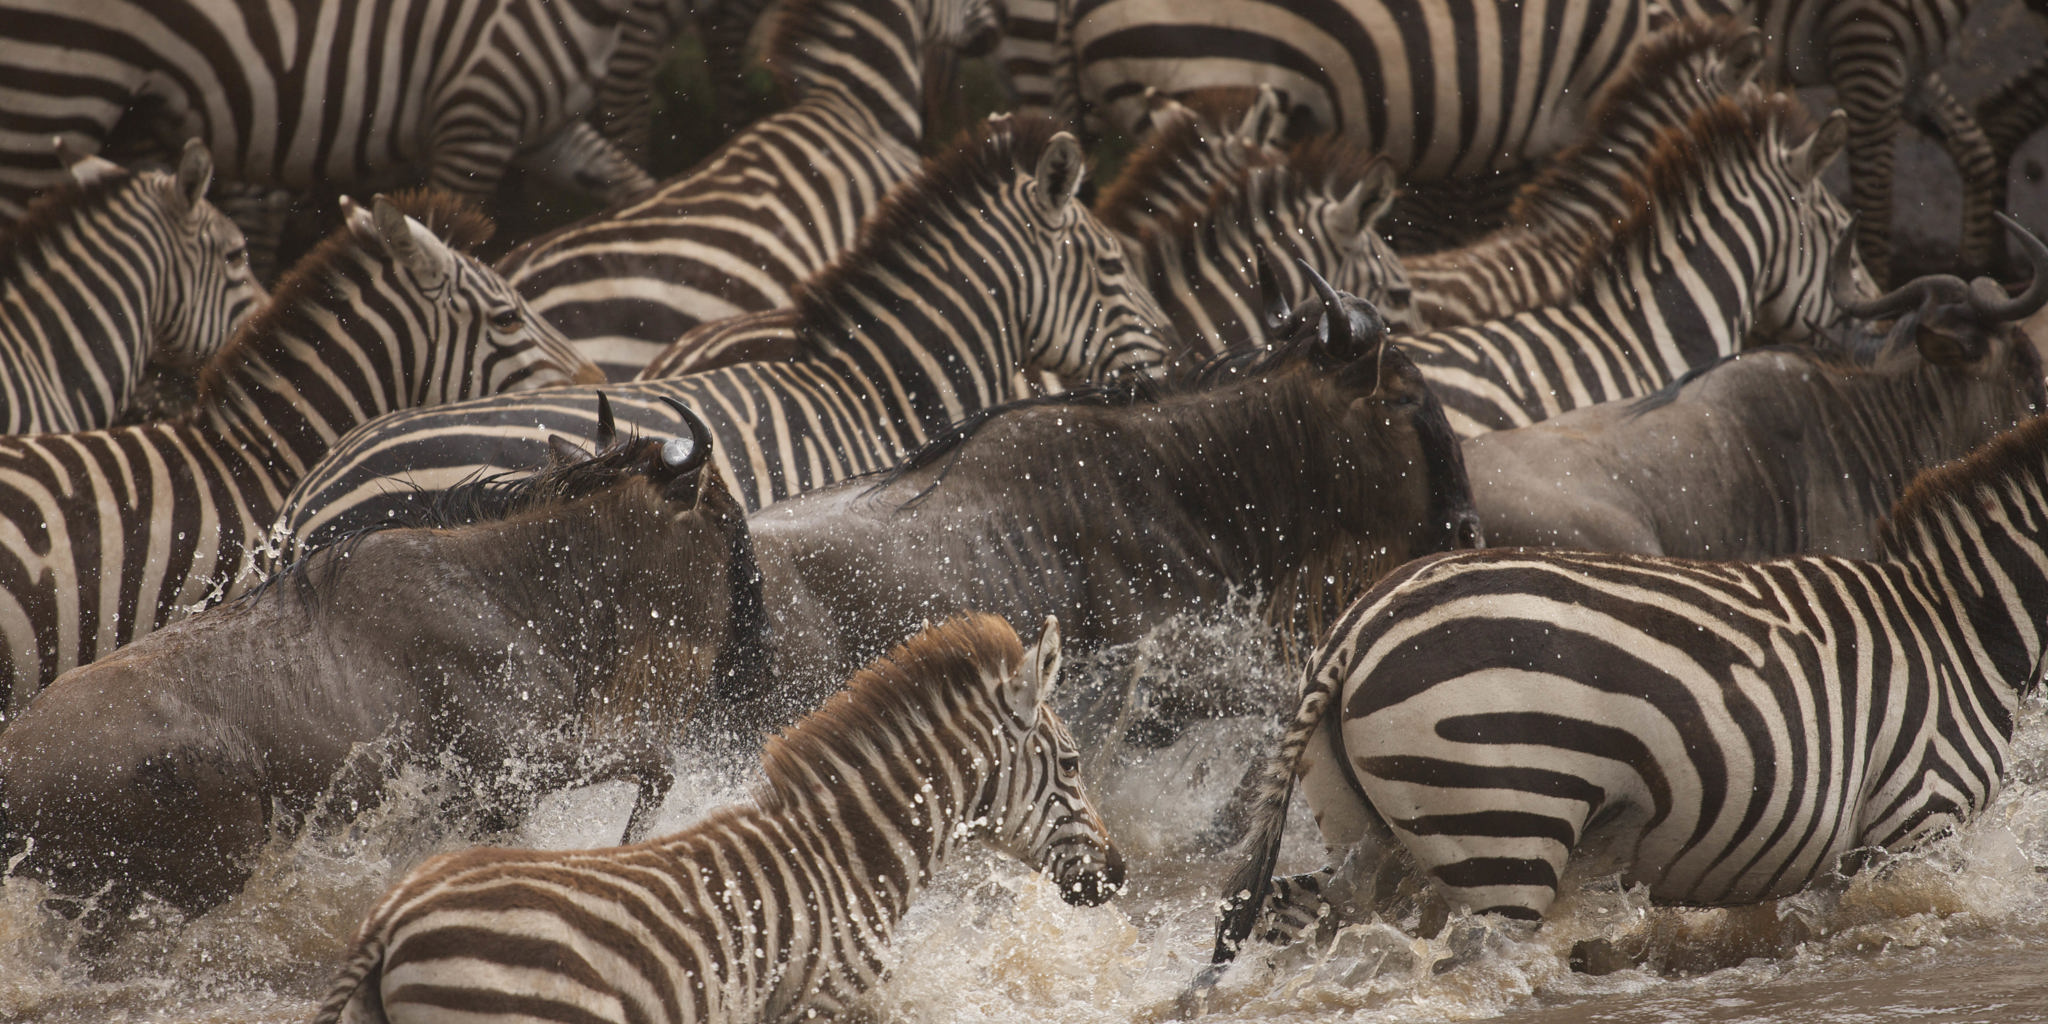 Mara zebra migration